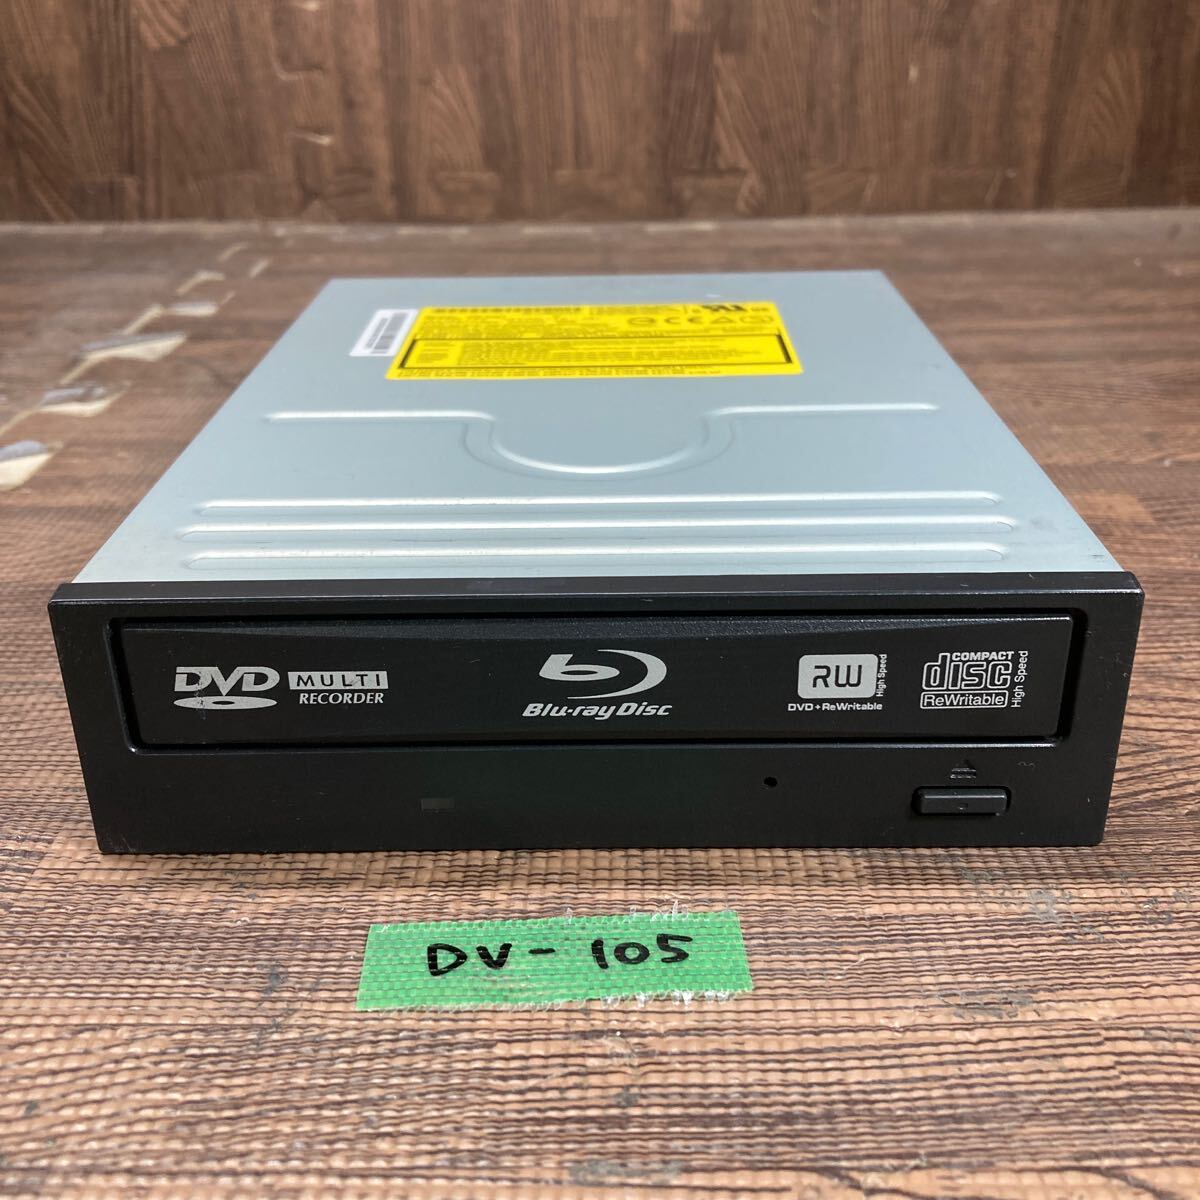 GK супер-скидка DV-105 Blu-ray Drive DVD настольный Panasonic SW-5583 2008 год производства Blu-ray,DVD воспроизведение подтверждено б/у товар 